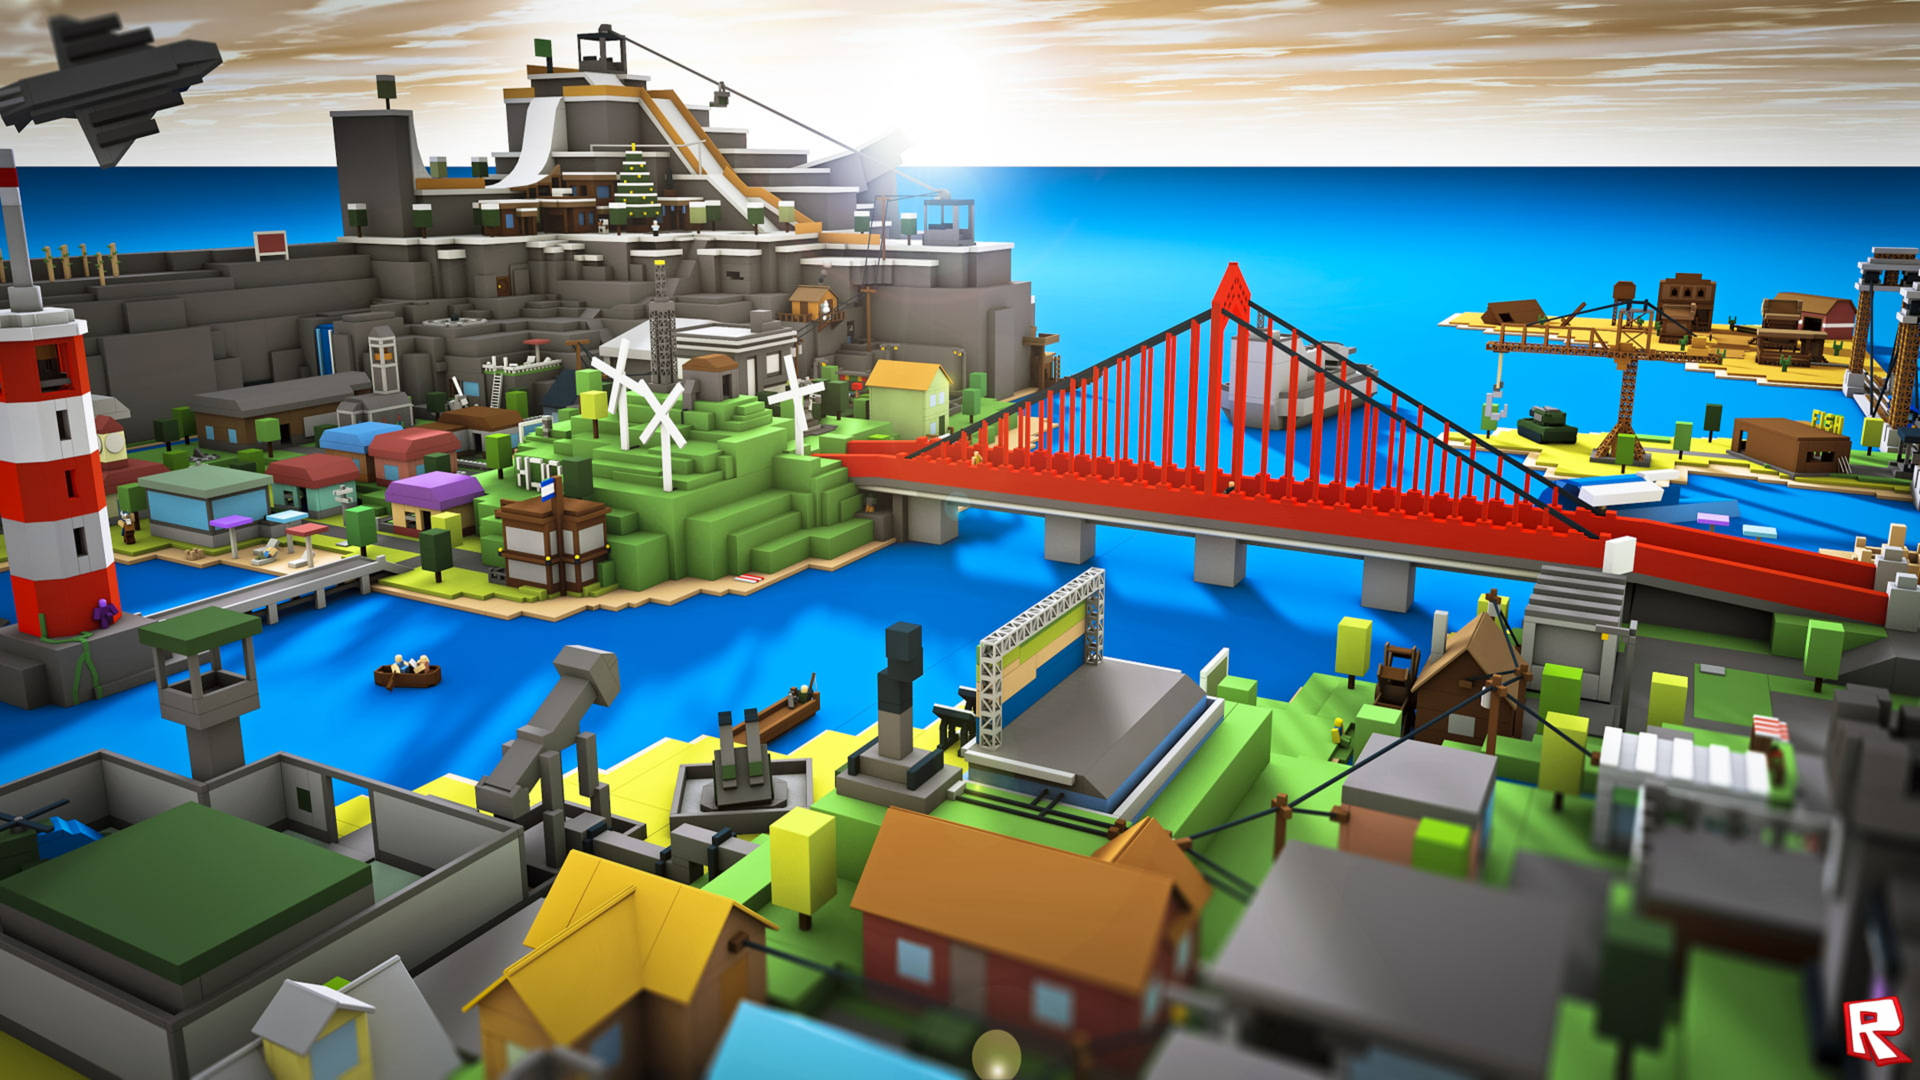 In-game City In Roblox 4k Wallpaper